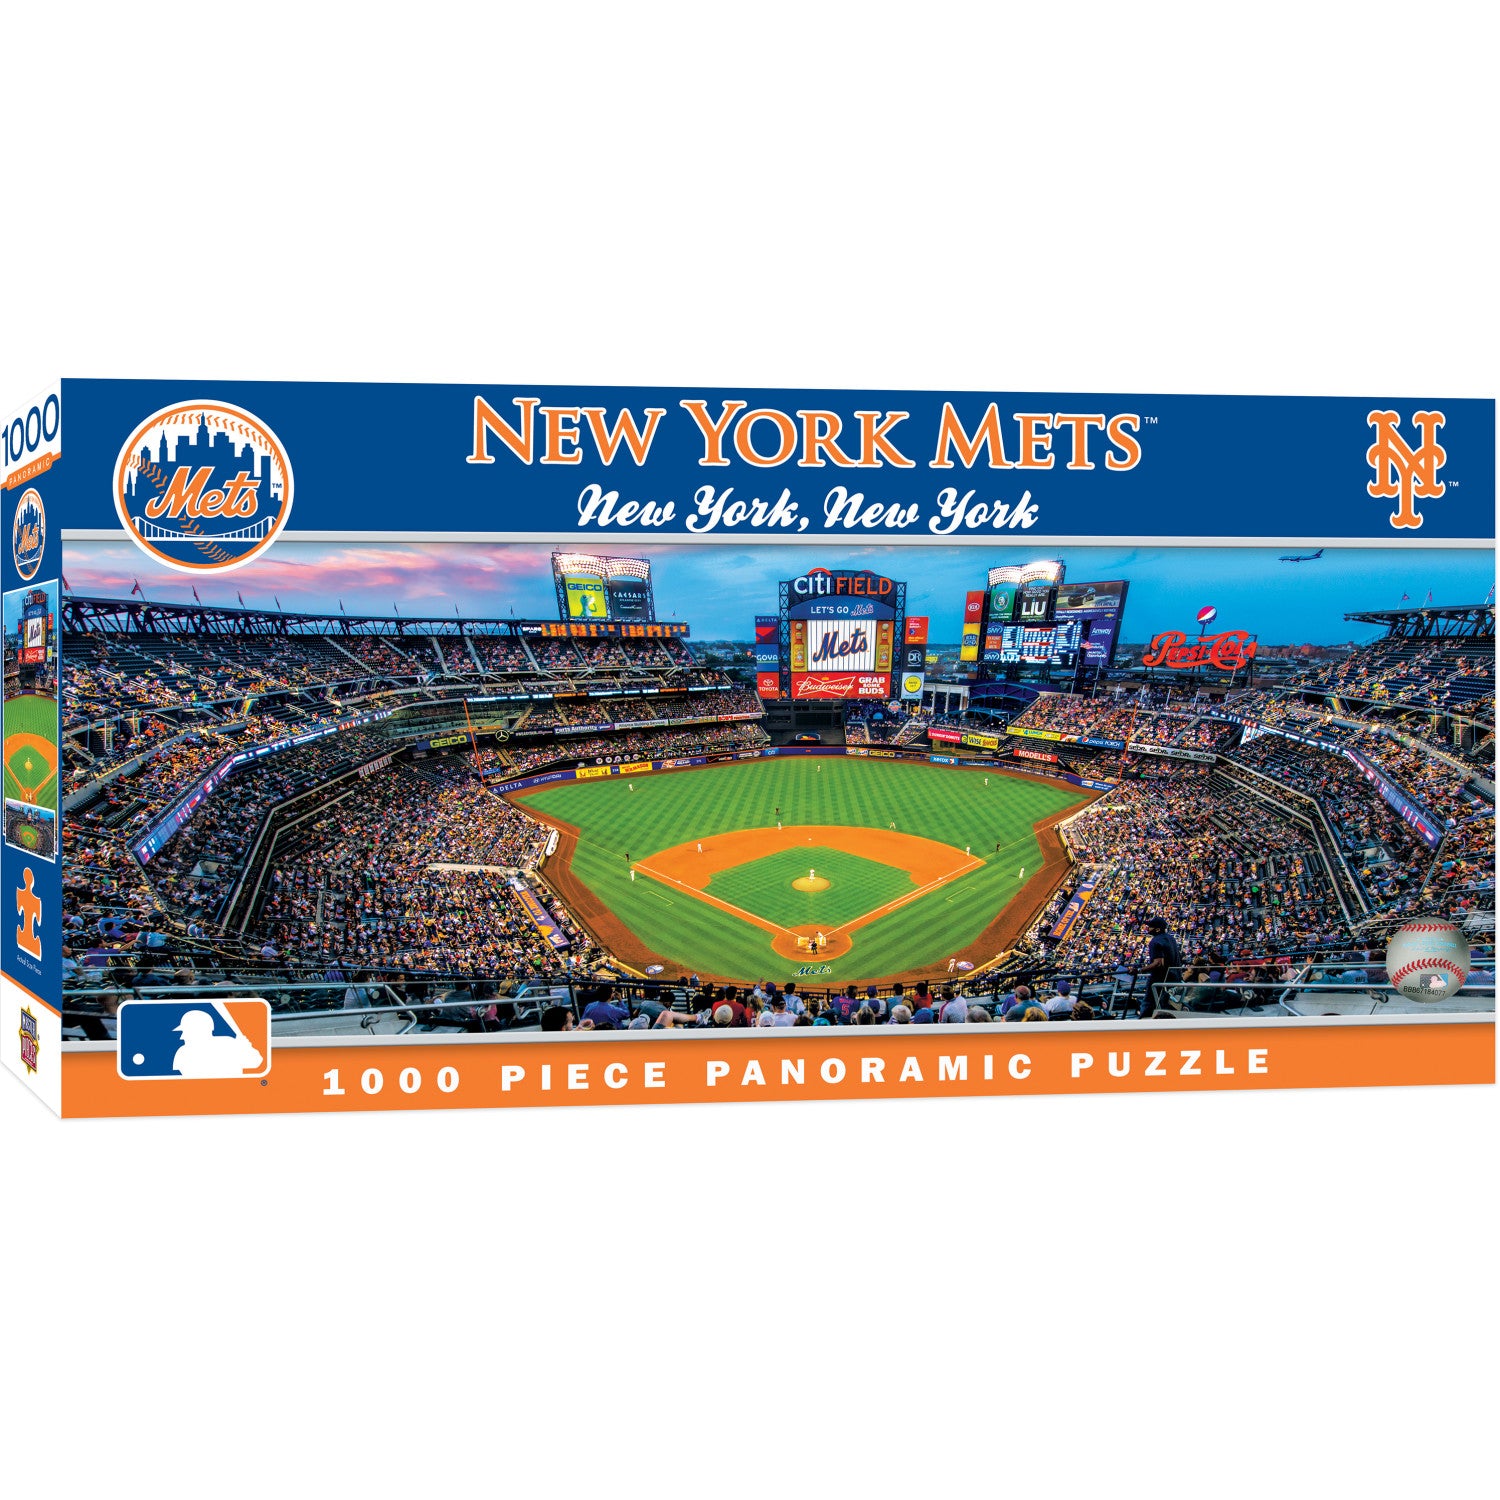 New York Mets - 1000 Piece Panoramic Puzzle